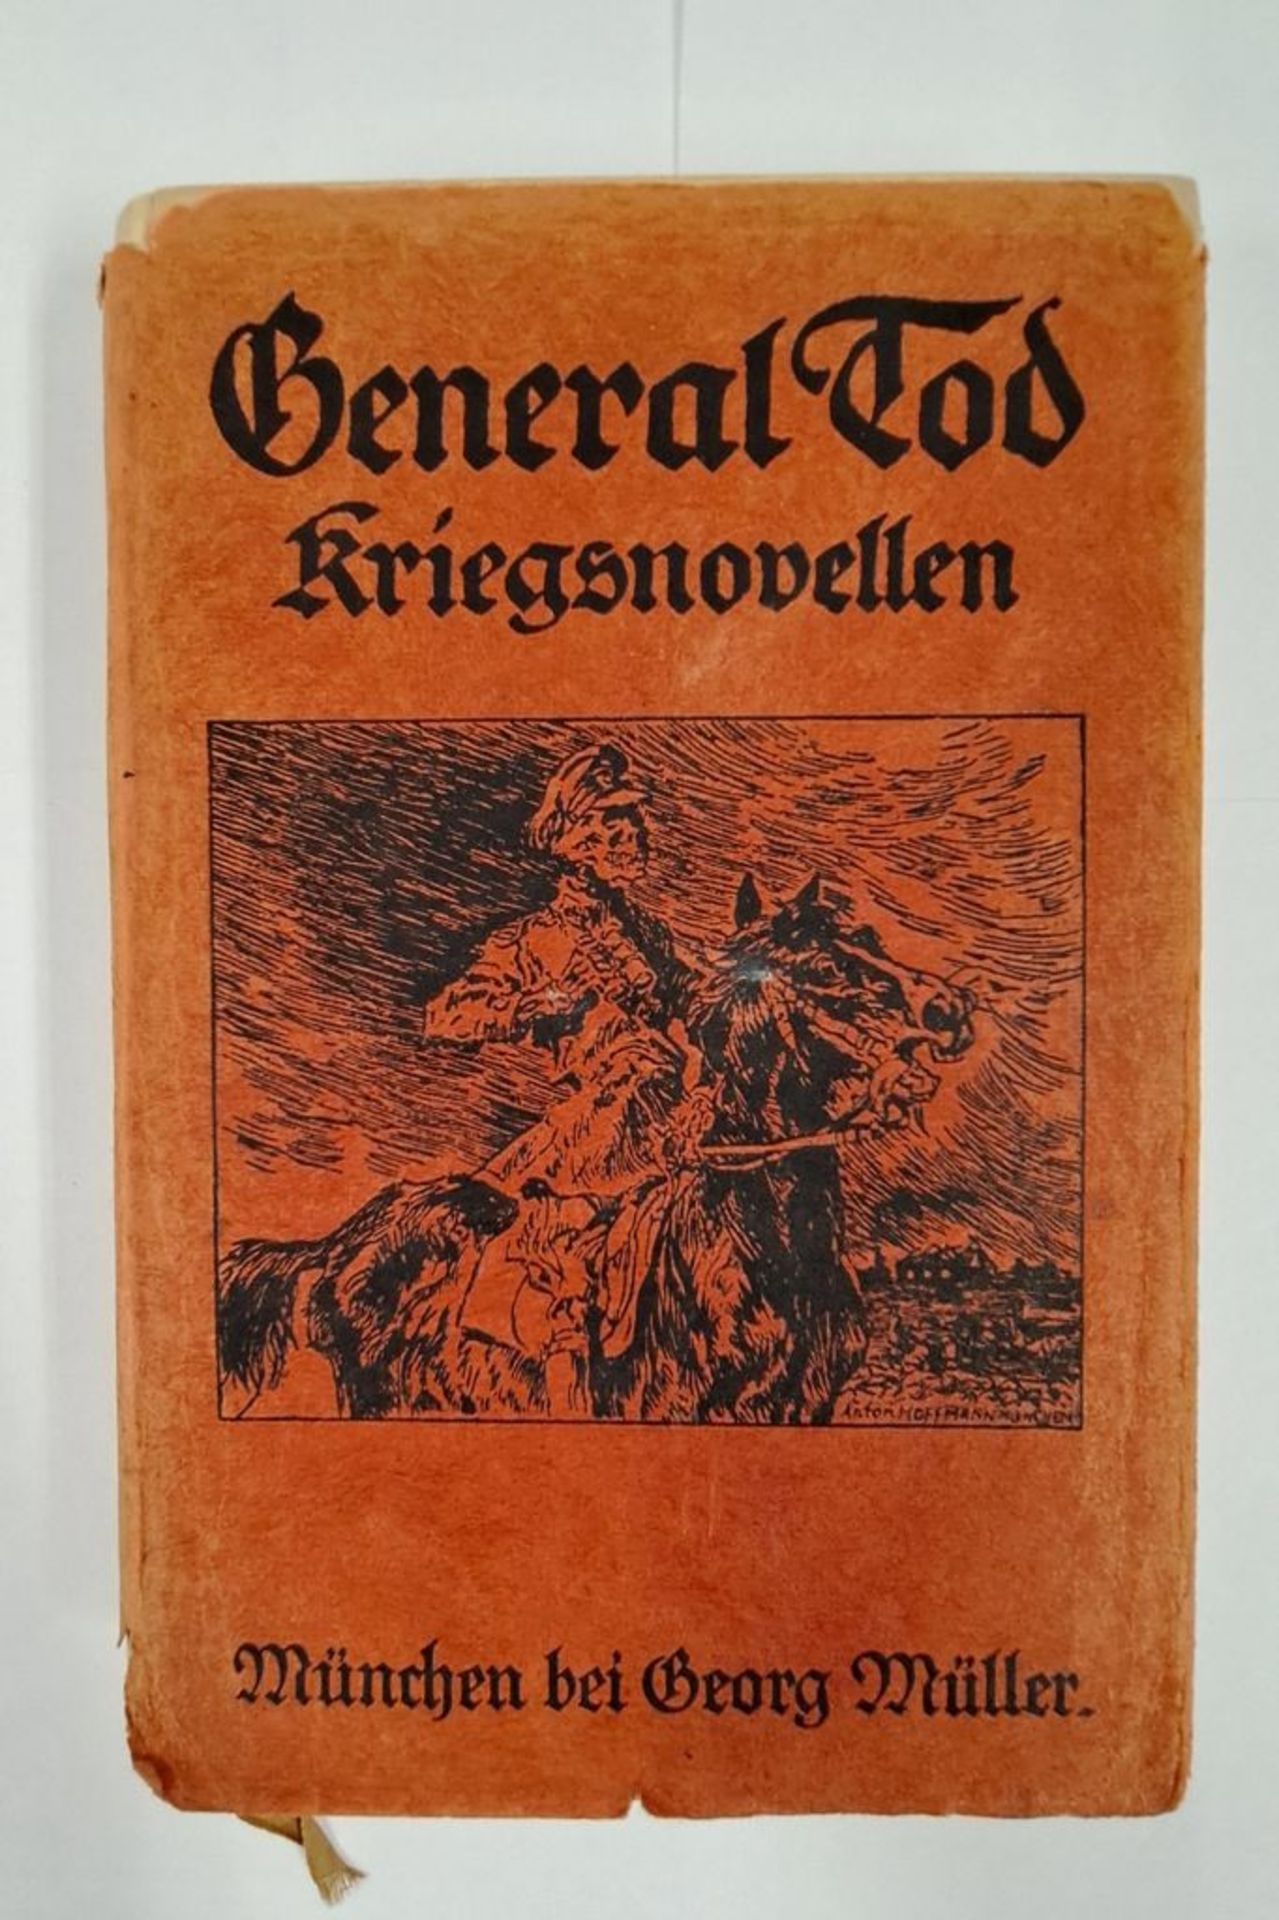 Buch "General Tod - Kriegsnovellen" 1915 - Bild 4 aus 4